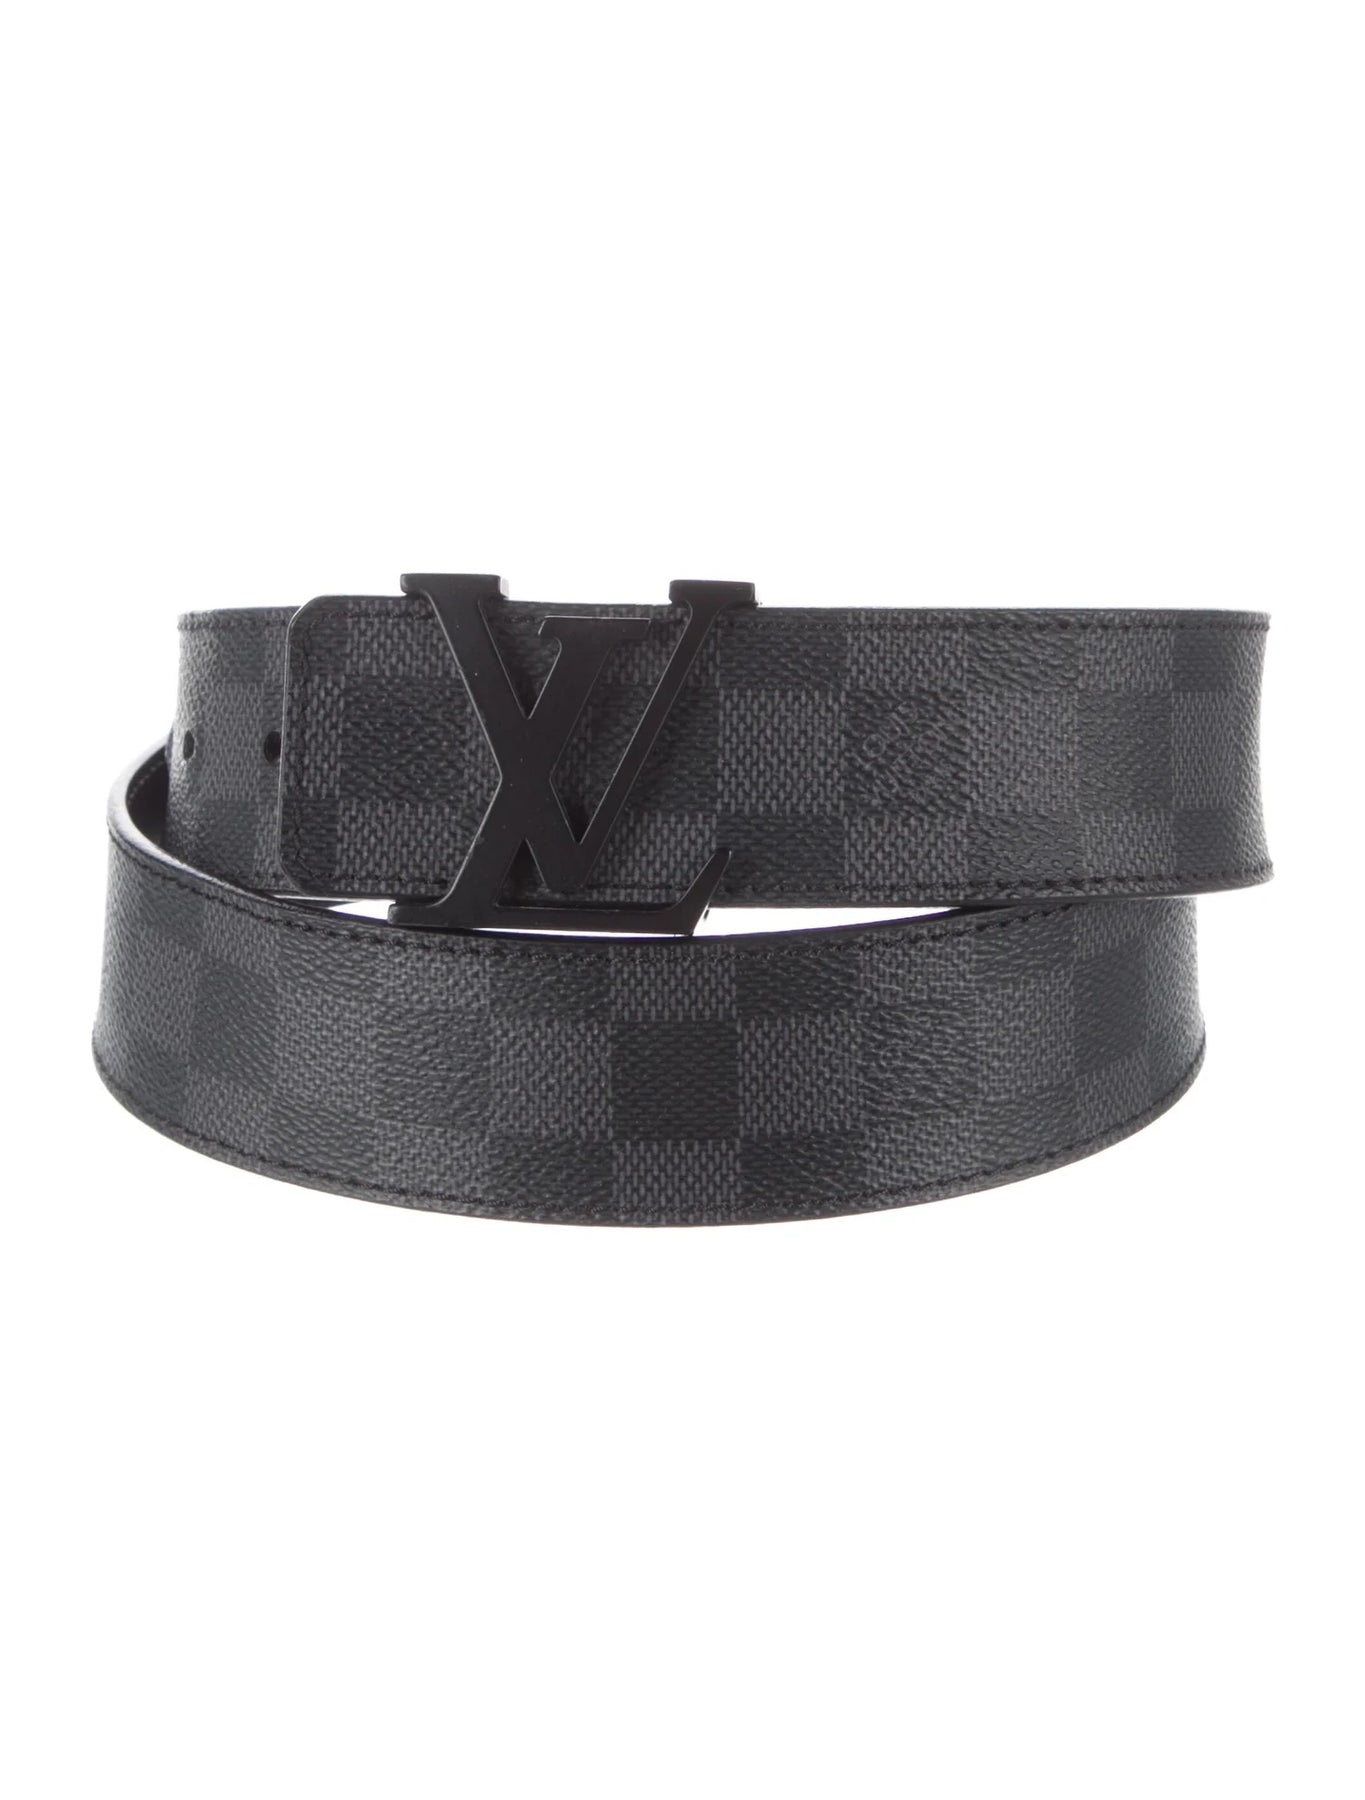 Louis Vuitton Neogram Belt Damier Graphite Medium Black 1138901